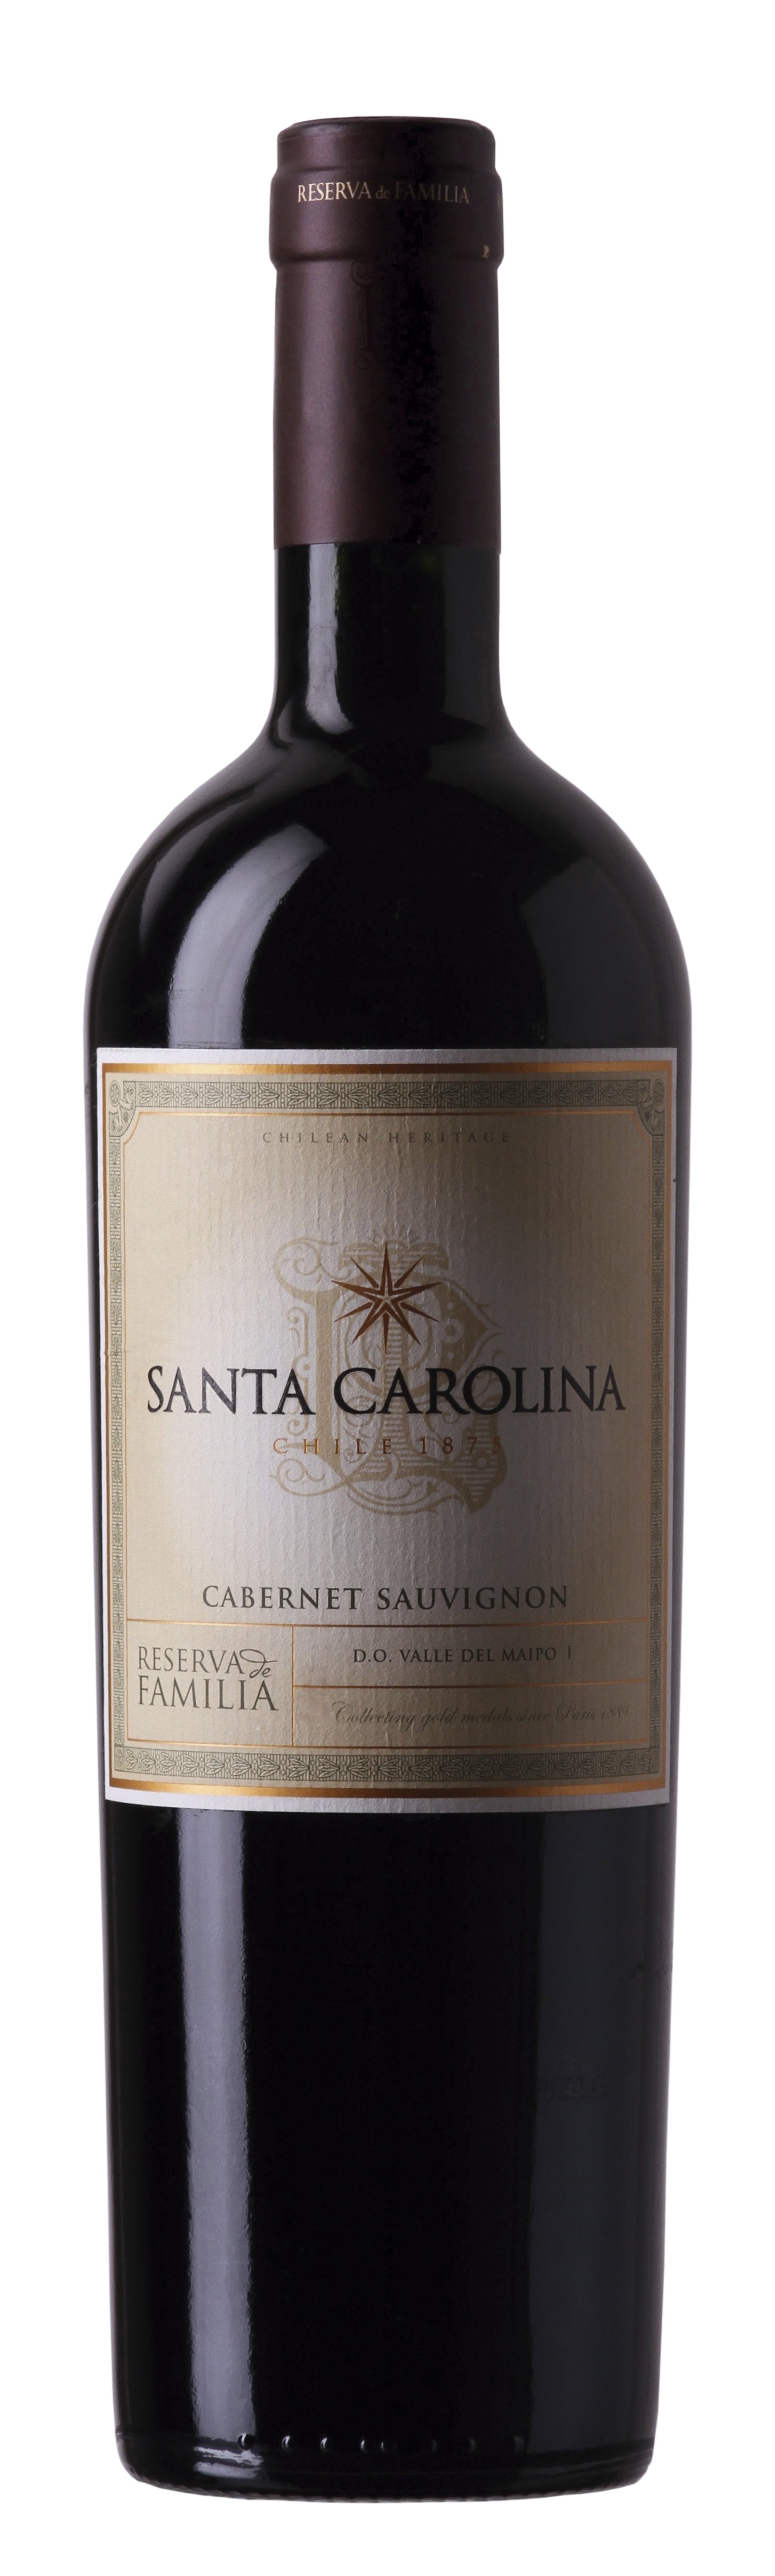 Reserva De Familia Cabernet Sauvignon 2015 De Viña Santa Carolina Es Elegido El Tercer Mejor Vino Del Mundo